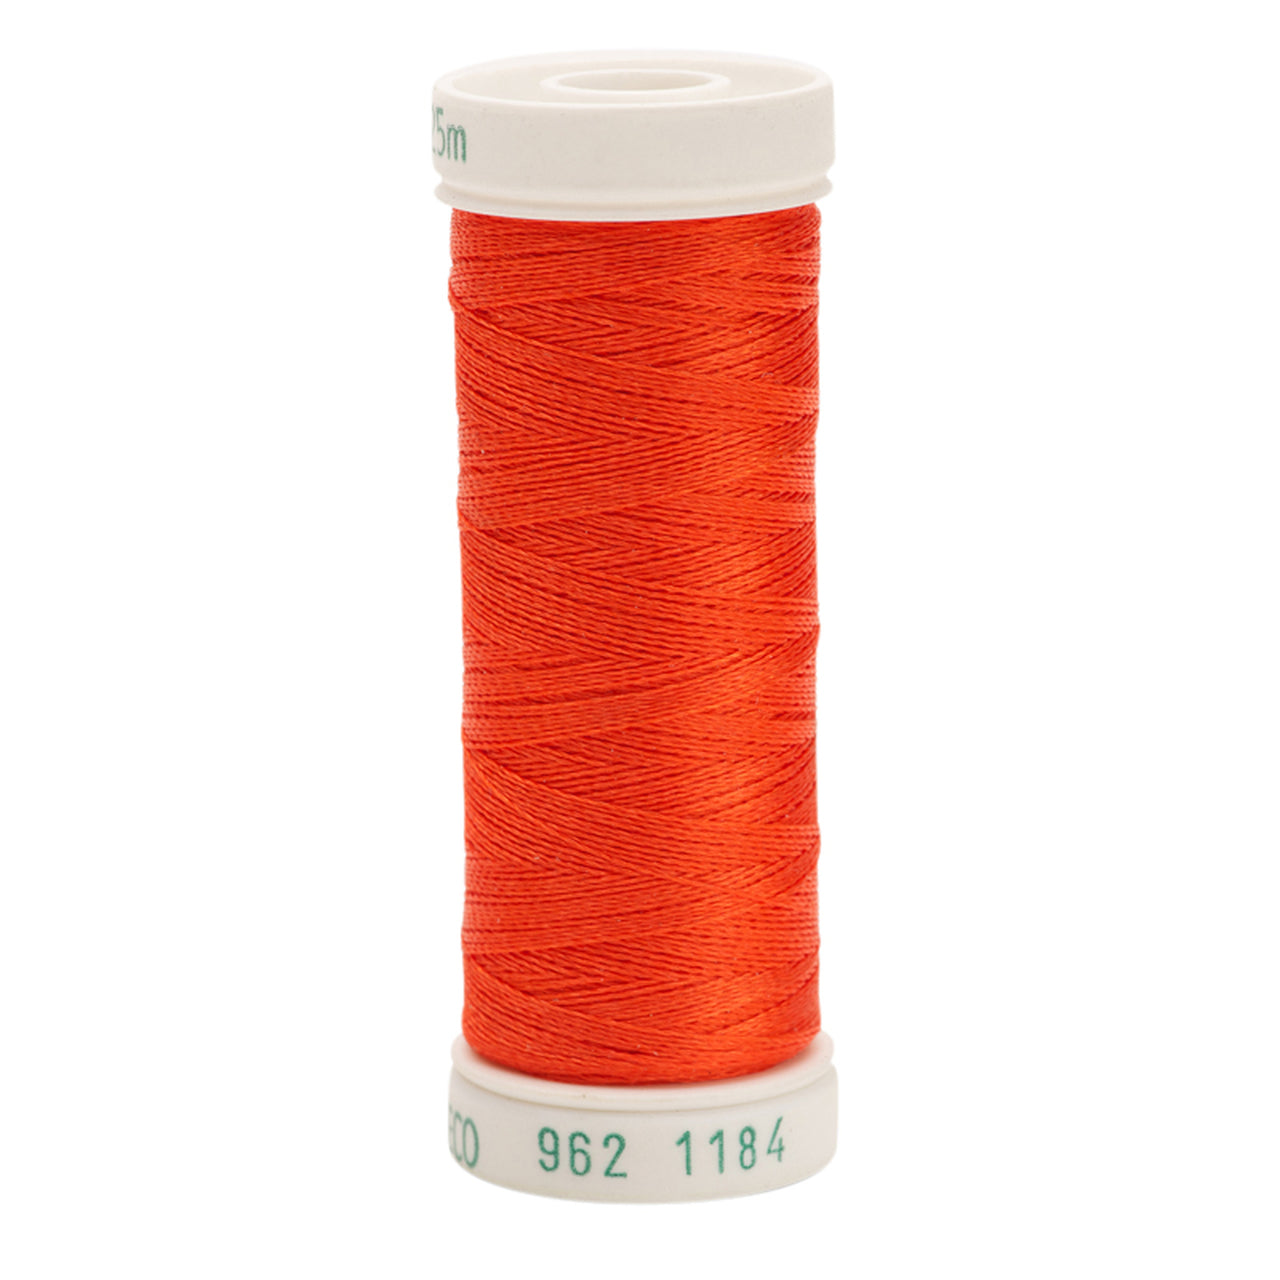 Sulky 40 Wt. Poly Deco Thread - Reds, Oranges, Yellows